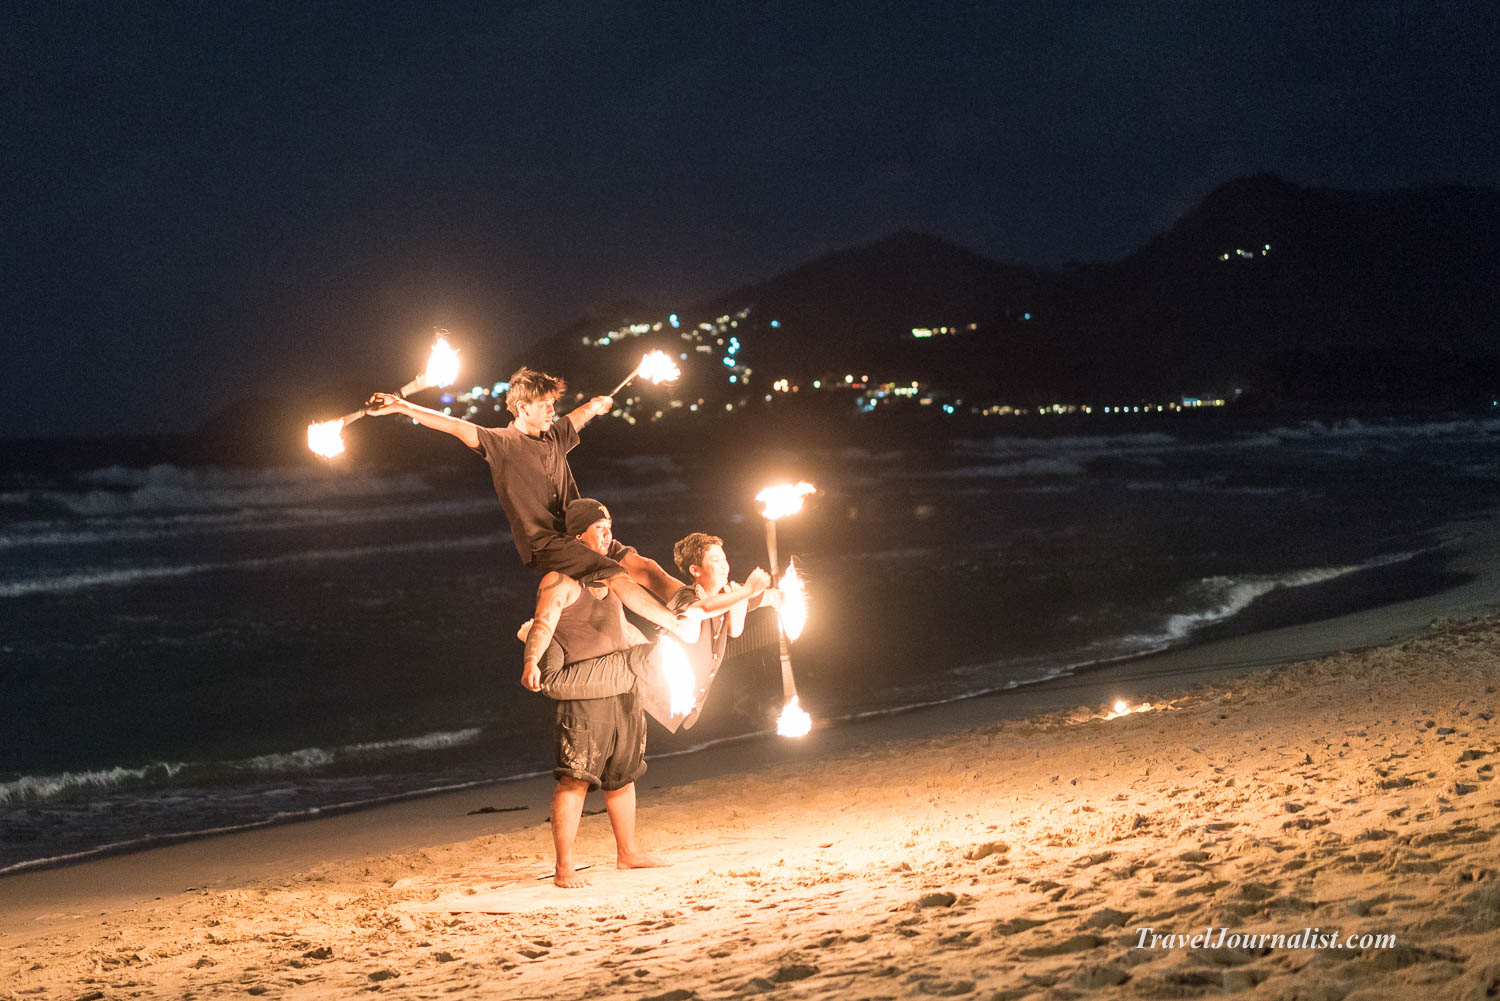 Fire-torch-artist-Juggler-Thailand-Beach-Grand-Centara-Koh-Samui-10